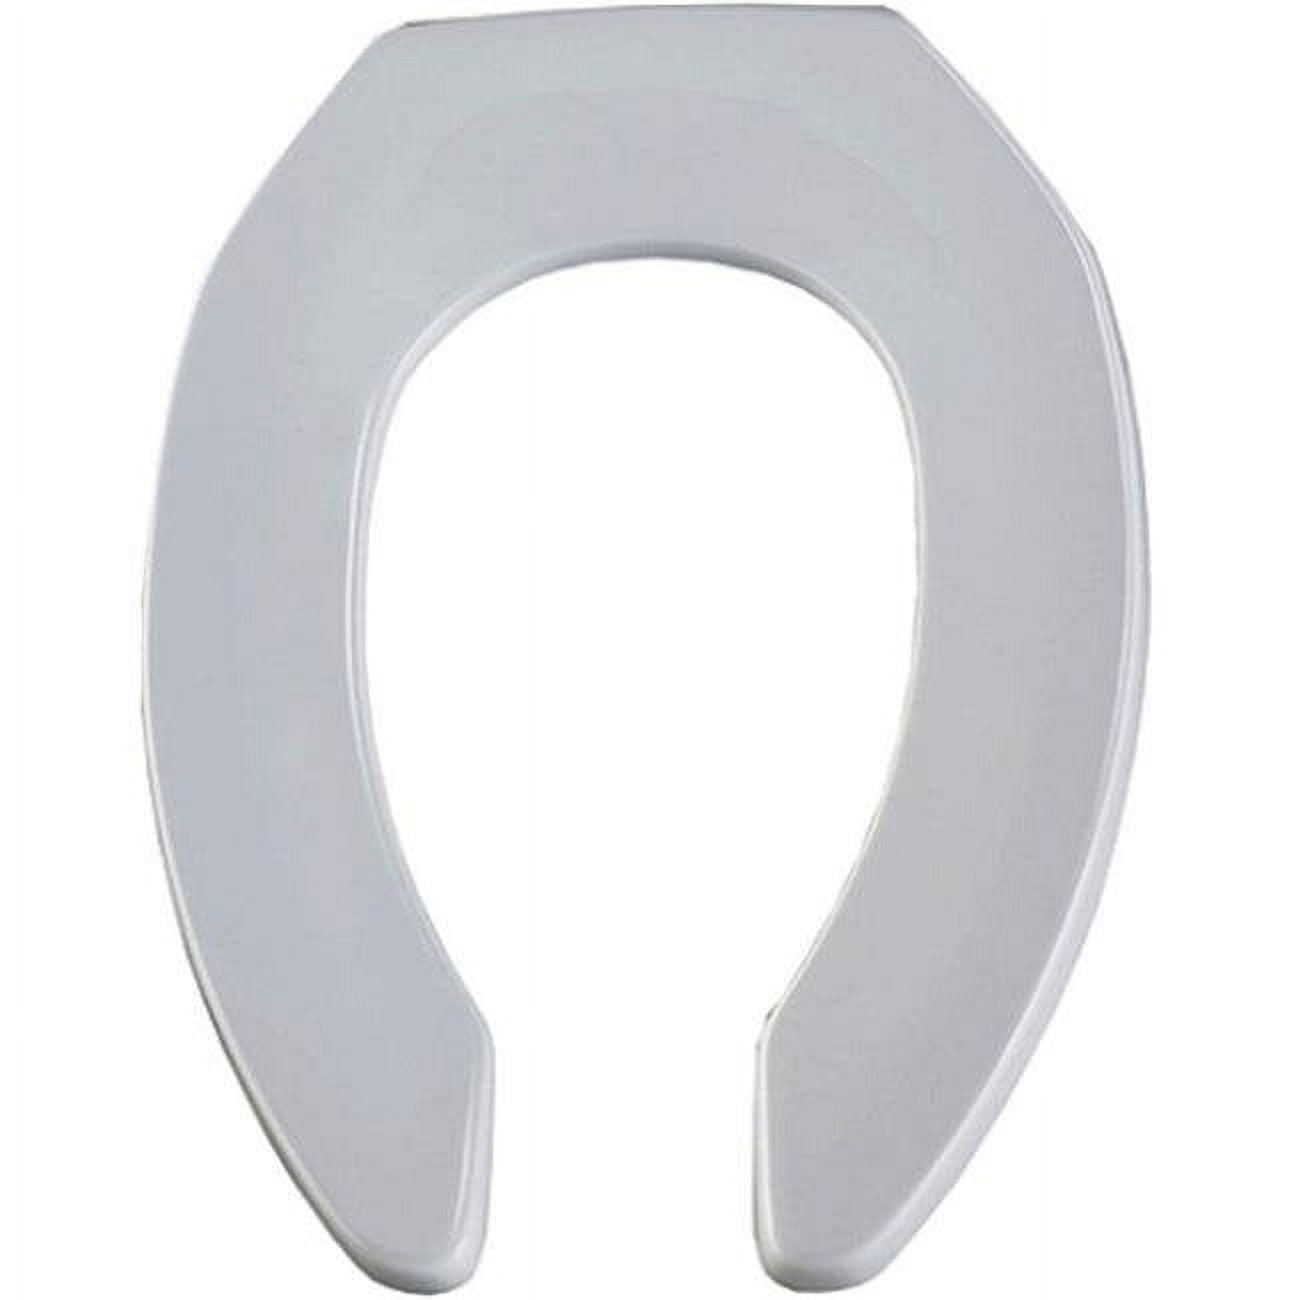 Bemis 1955ct 000 Commercial Plastic Open Front Toilet Seat, White